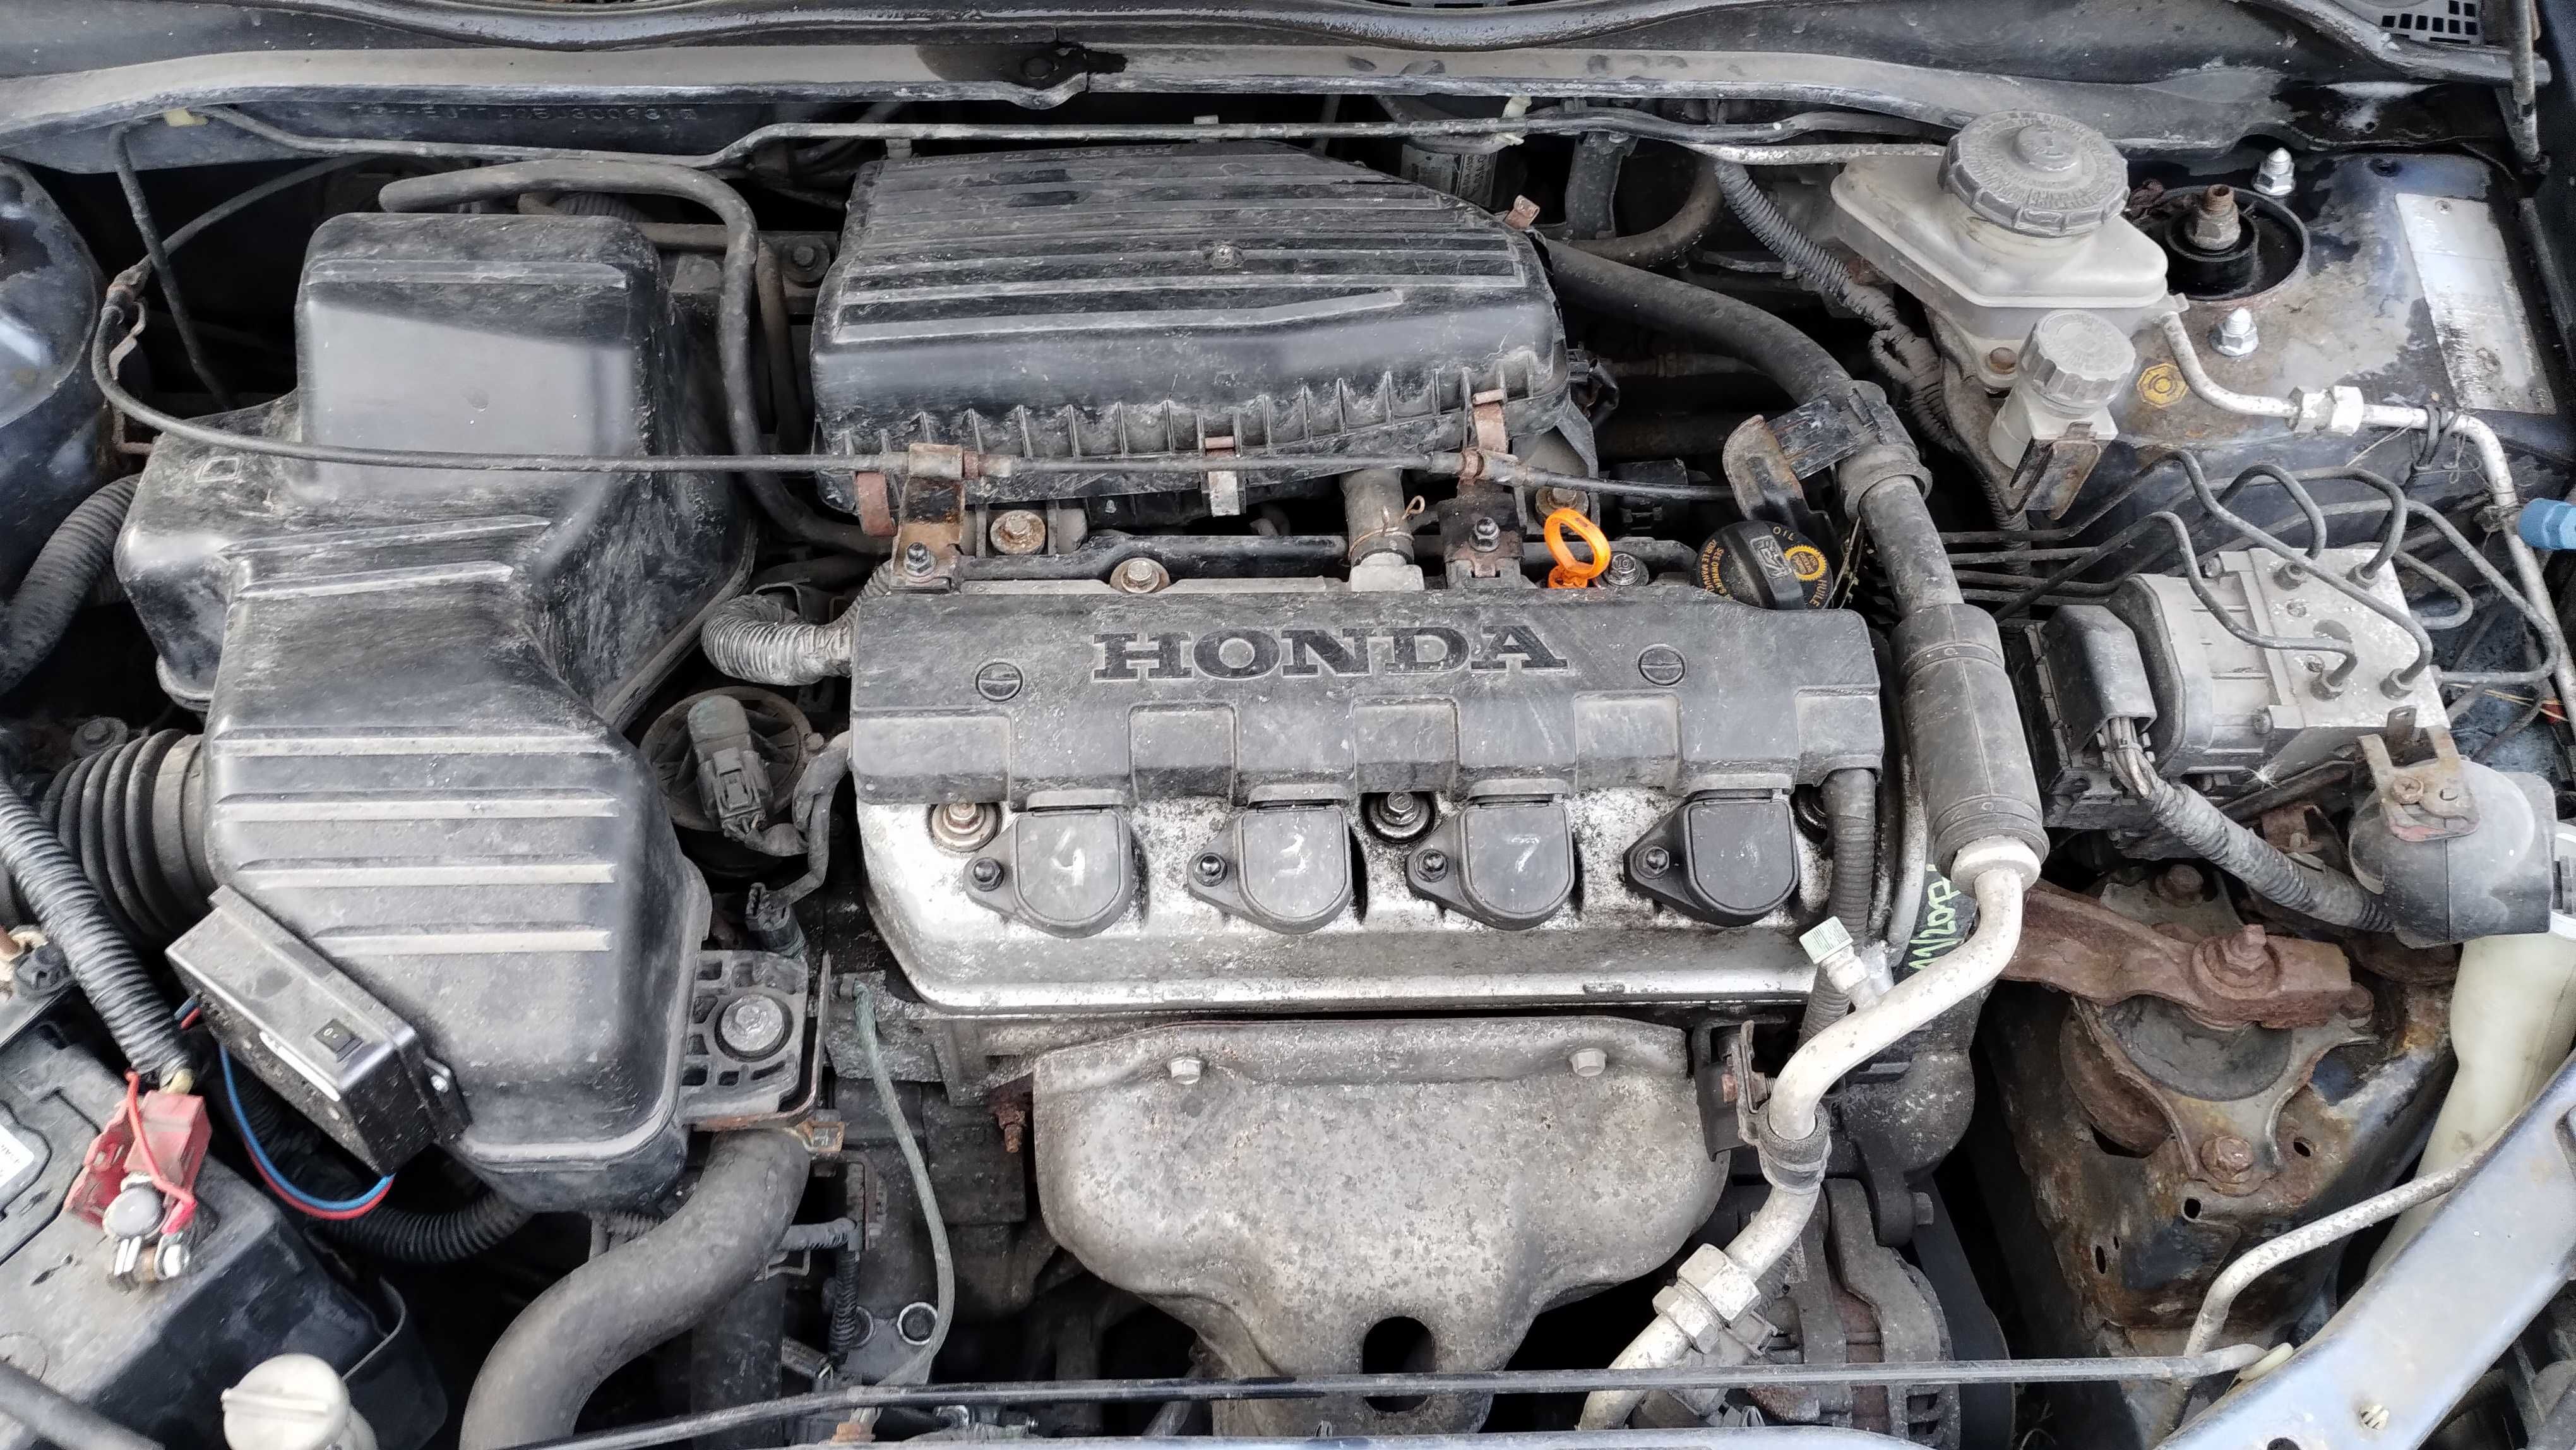 Honda Civic 1.4 benzyna 90km 2004r